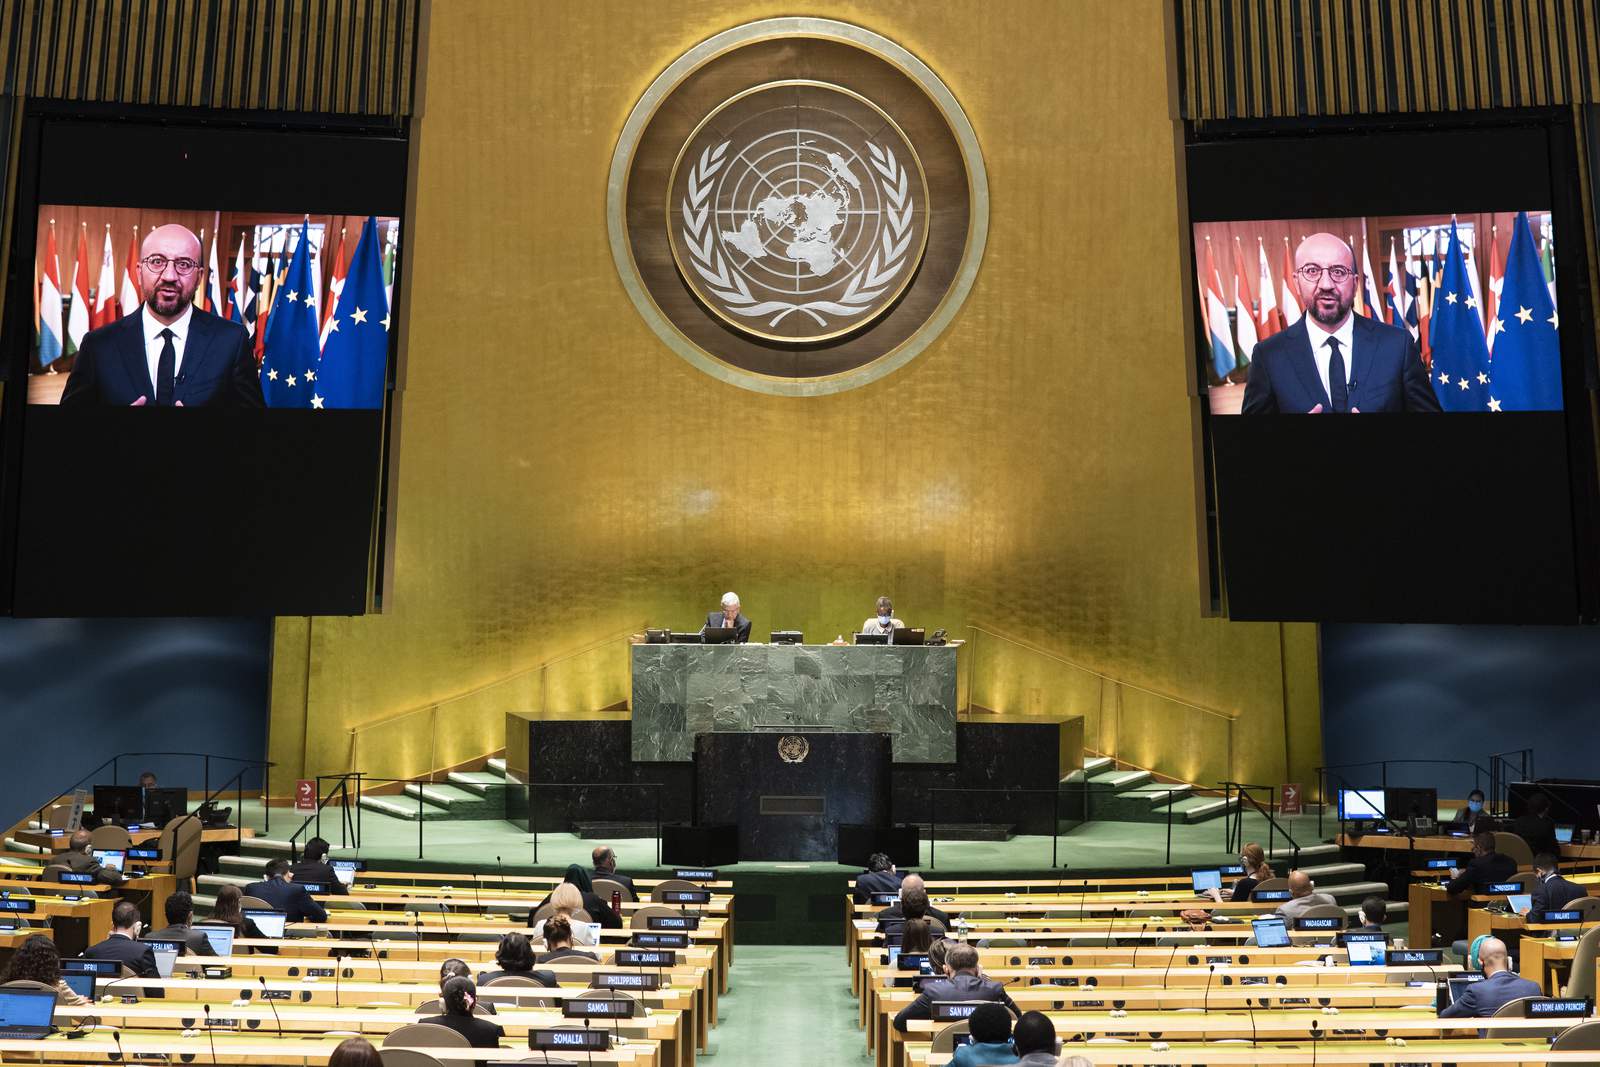 Under virus strain, Europe's leaders plea at UN for unity